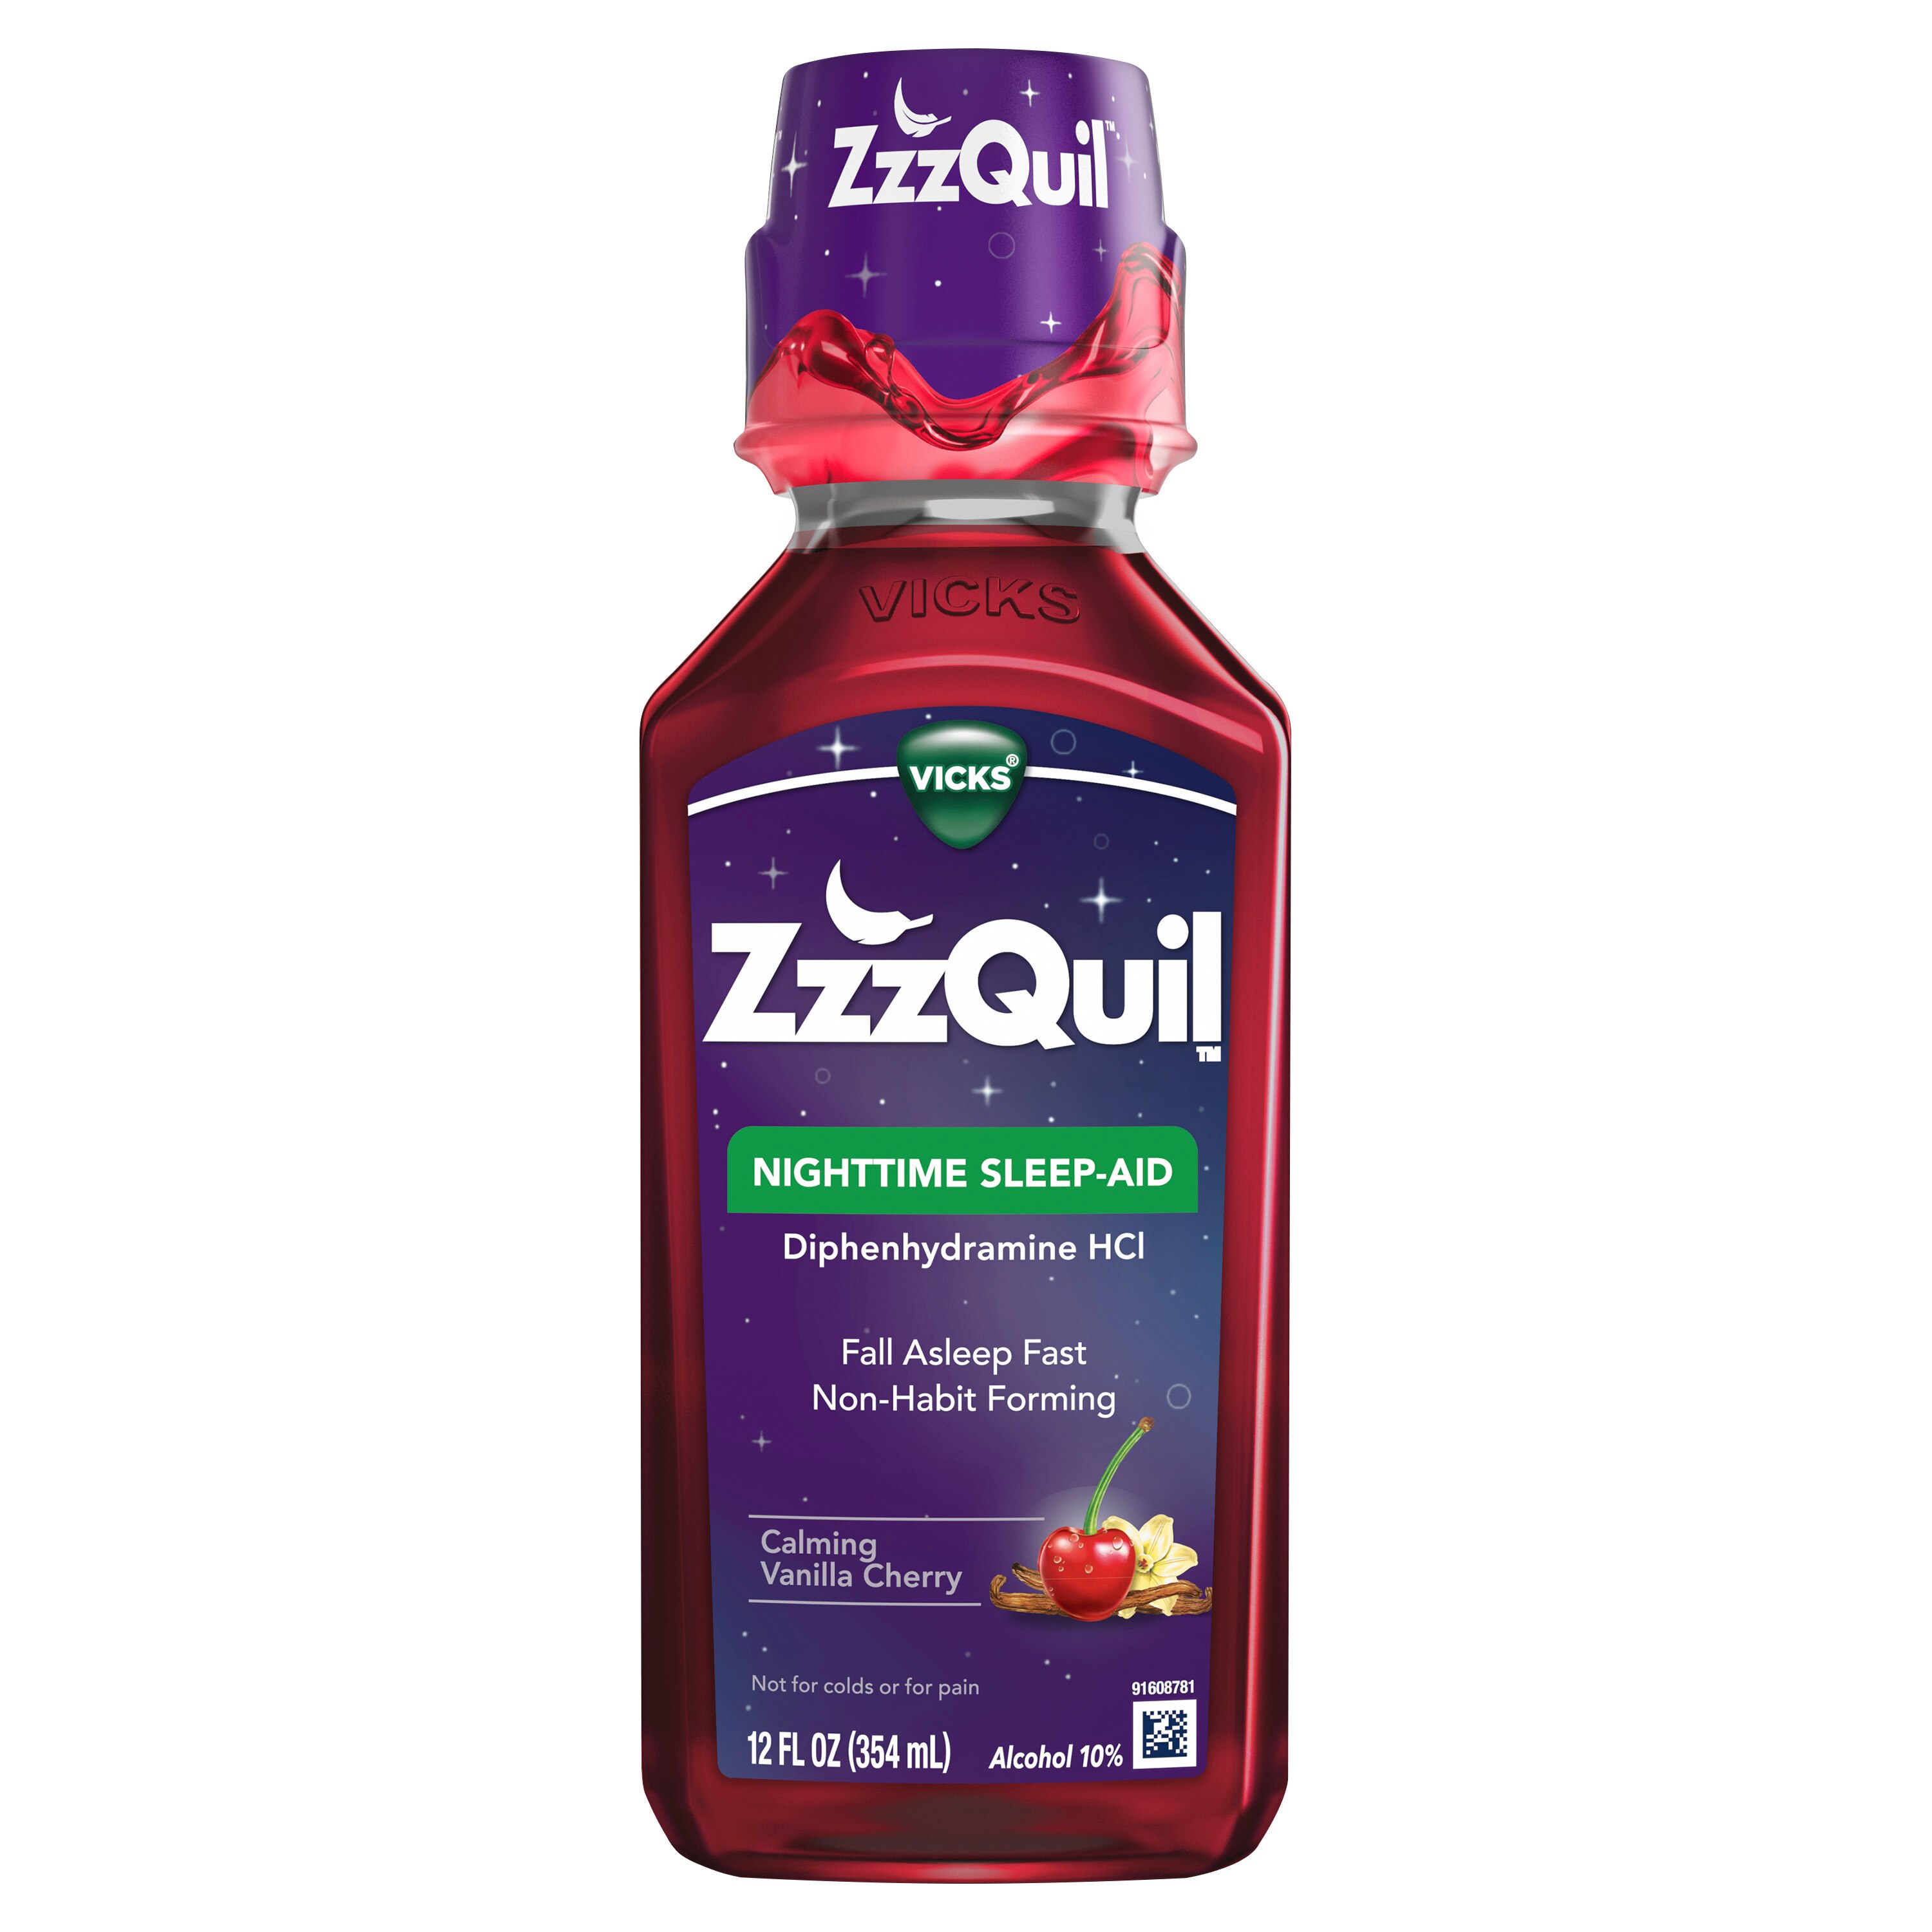 ZzzQuil Nighttime - Estimulante de ayuda para dormir, uso nocturno, Calming Vanilla Cherry, 12 oz